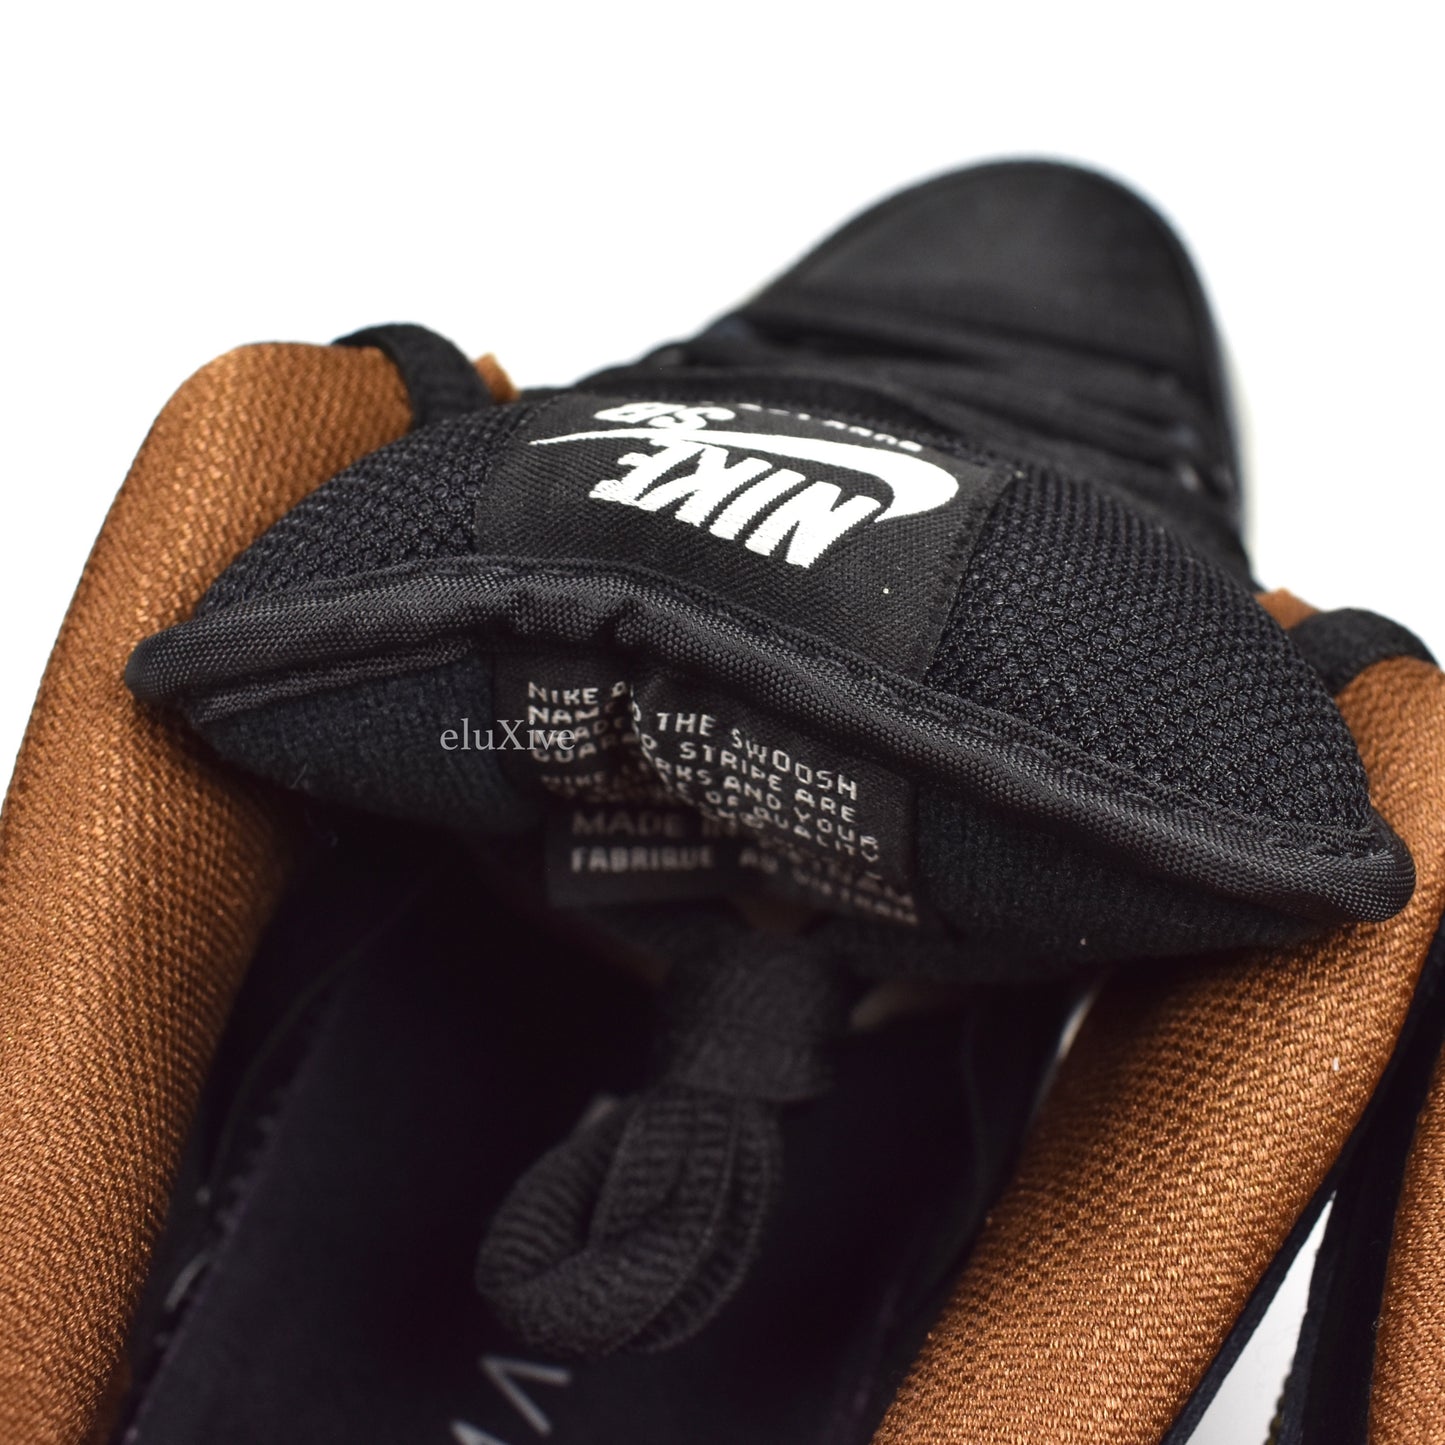 Nike - Dunk Low Premium SB QS 'Black Rain'